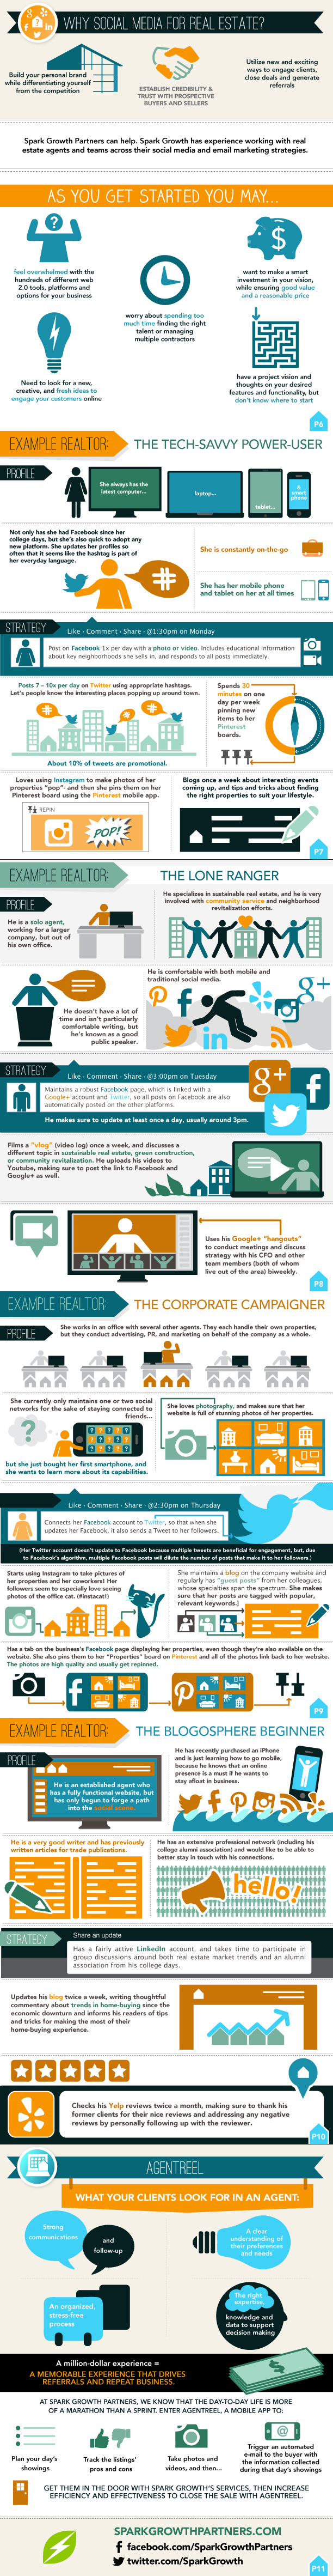 Social Media Real Estate Infographic